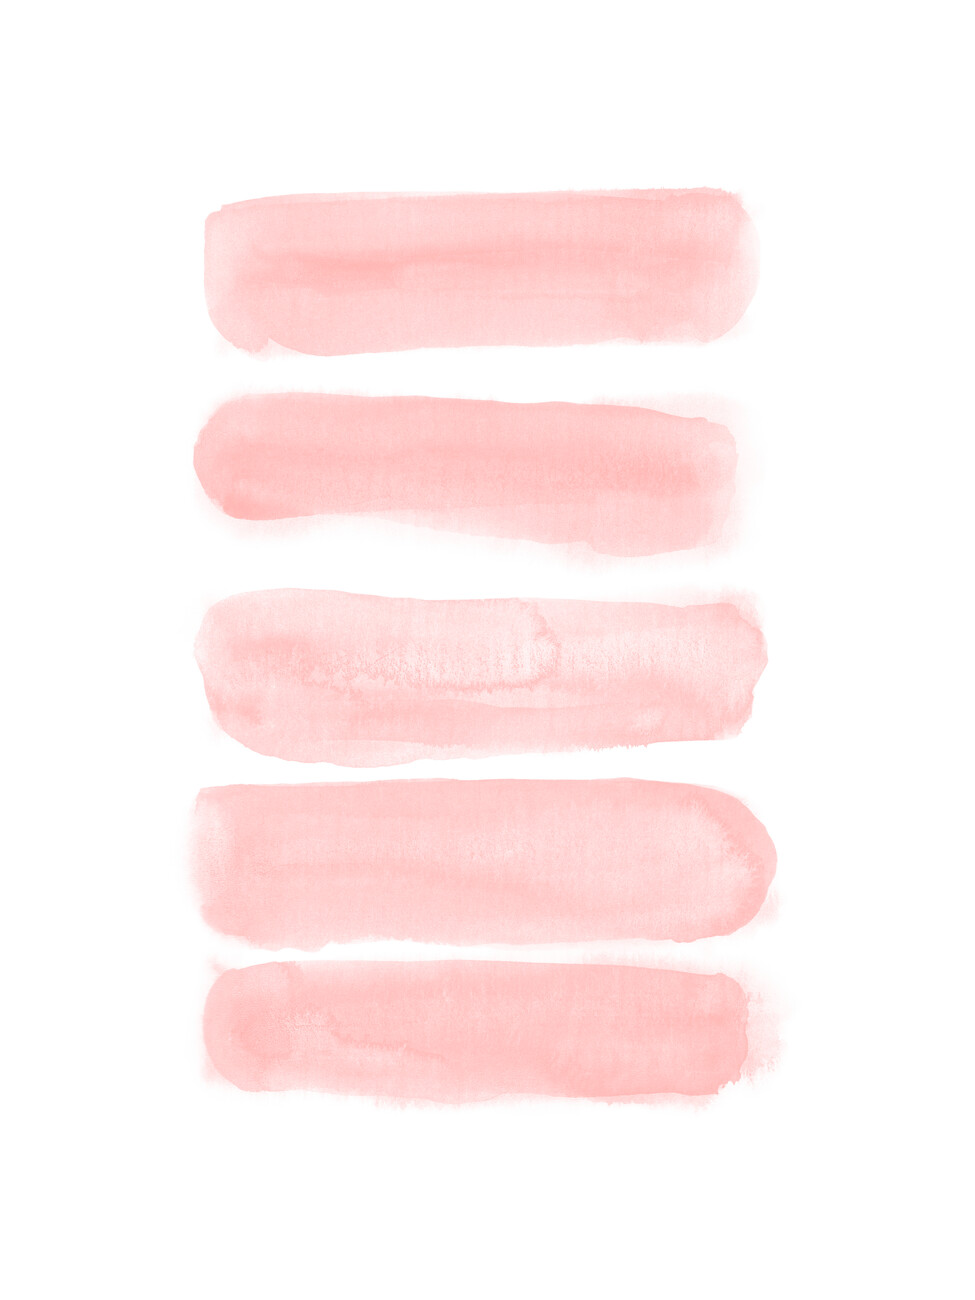 Illustration Soft pink watercolor brush strokes